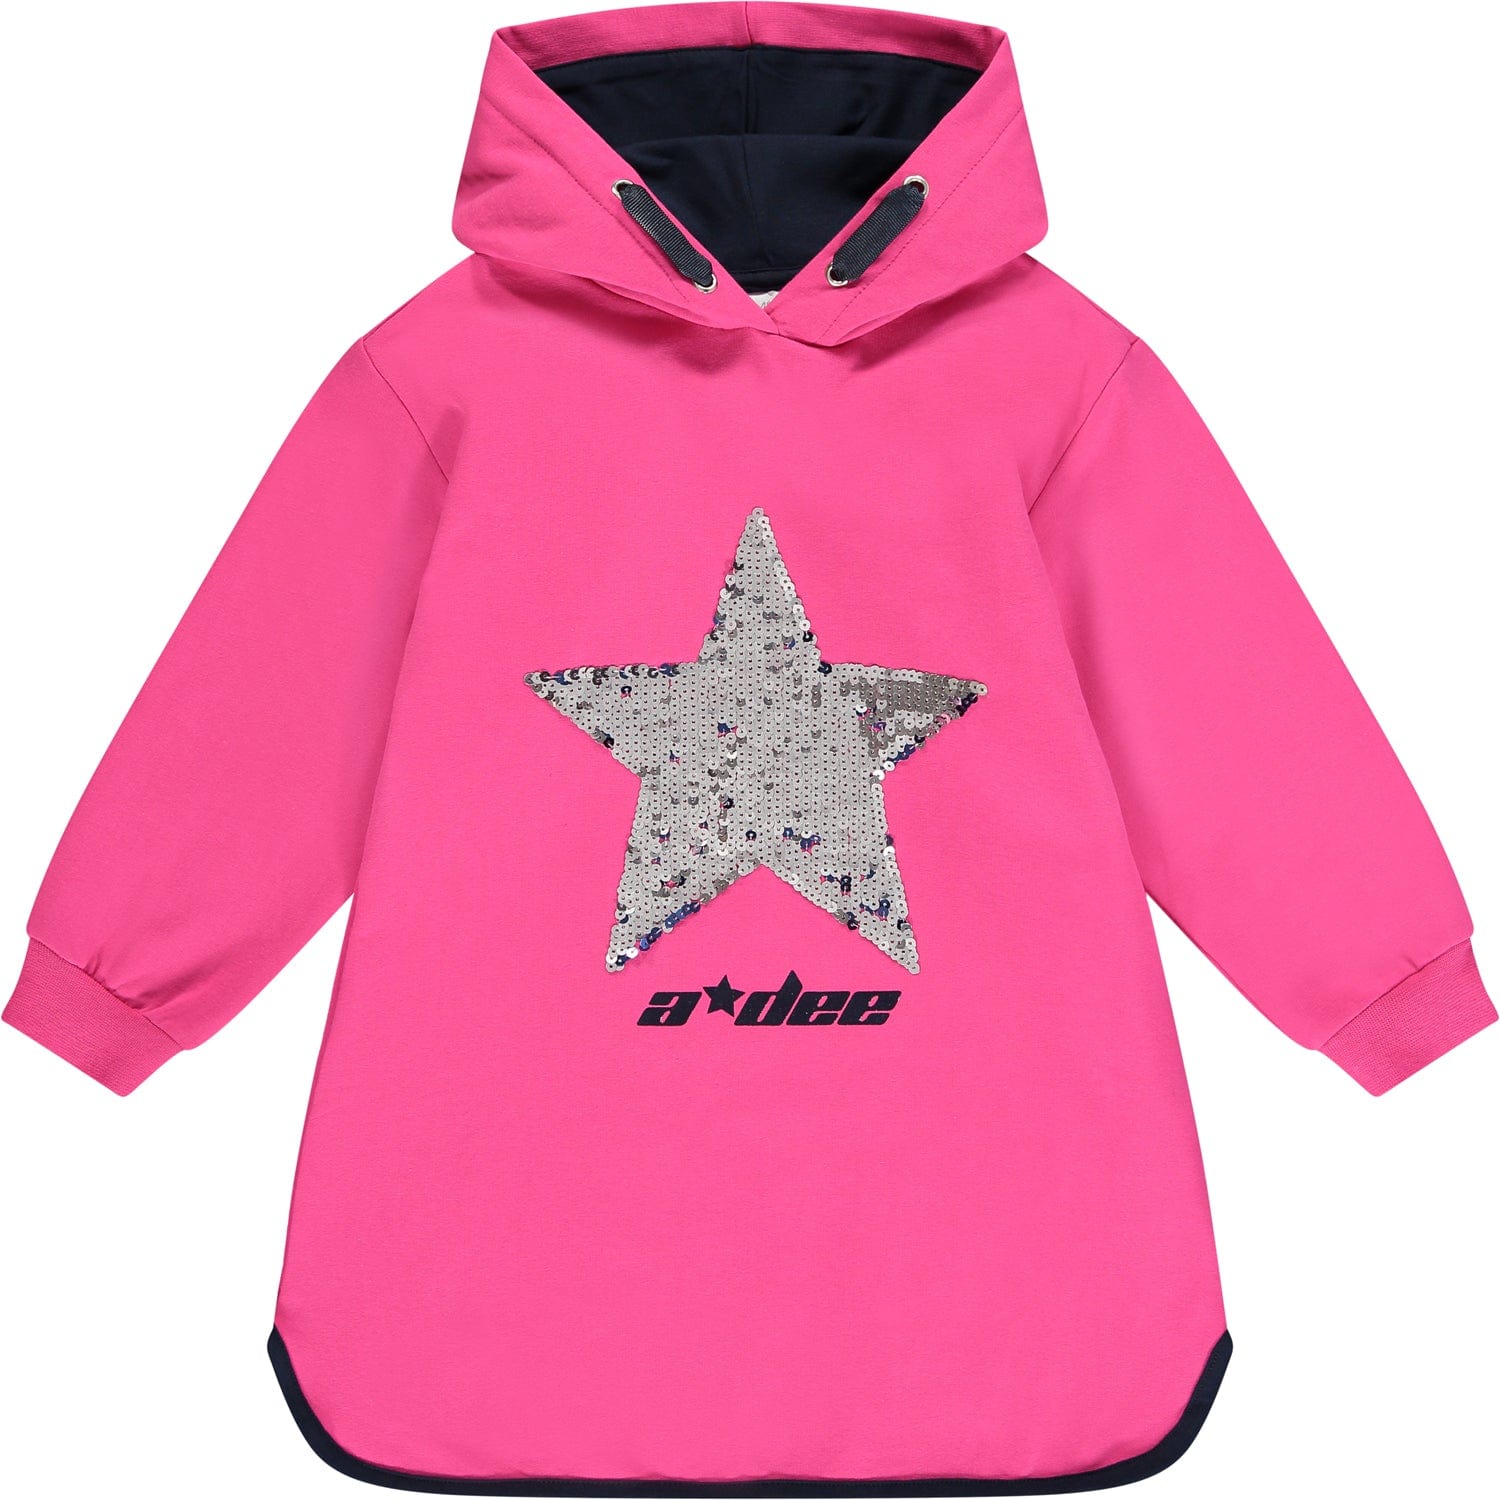 A DEE - Stormi Hoody Star Dress - Pink Glaze